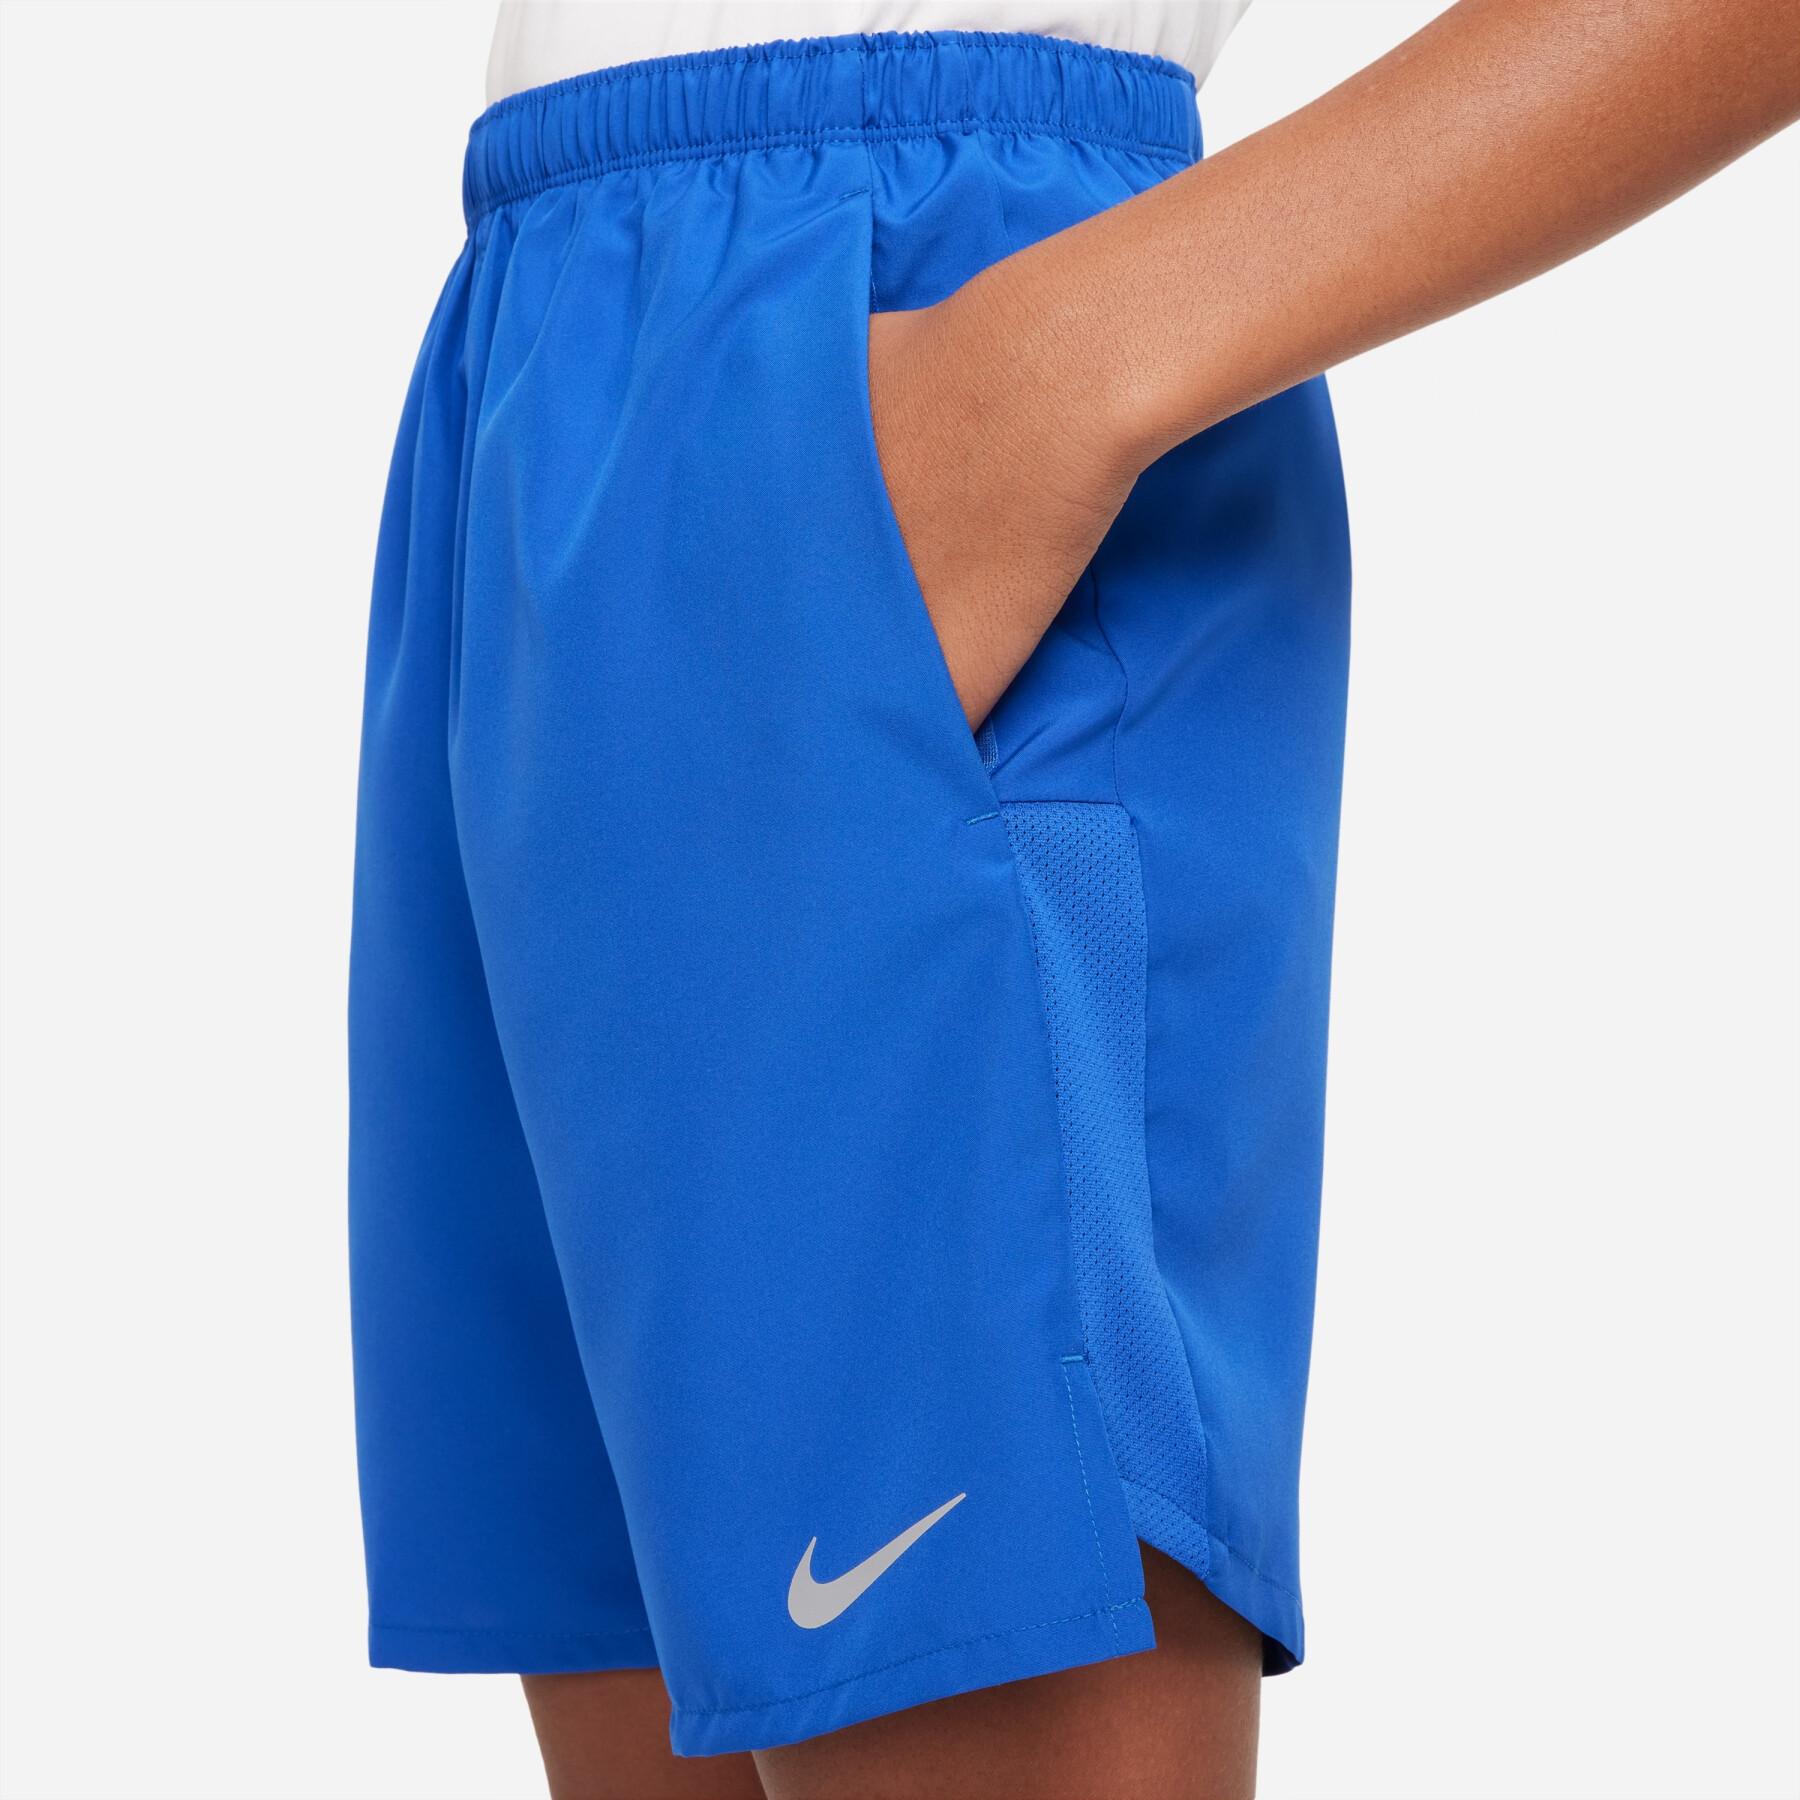 Children's shorts Nike Challenger